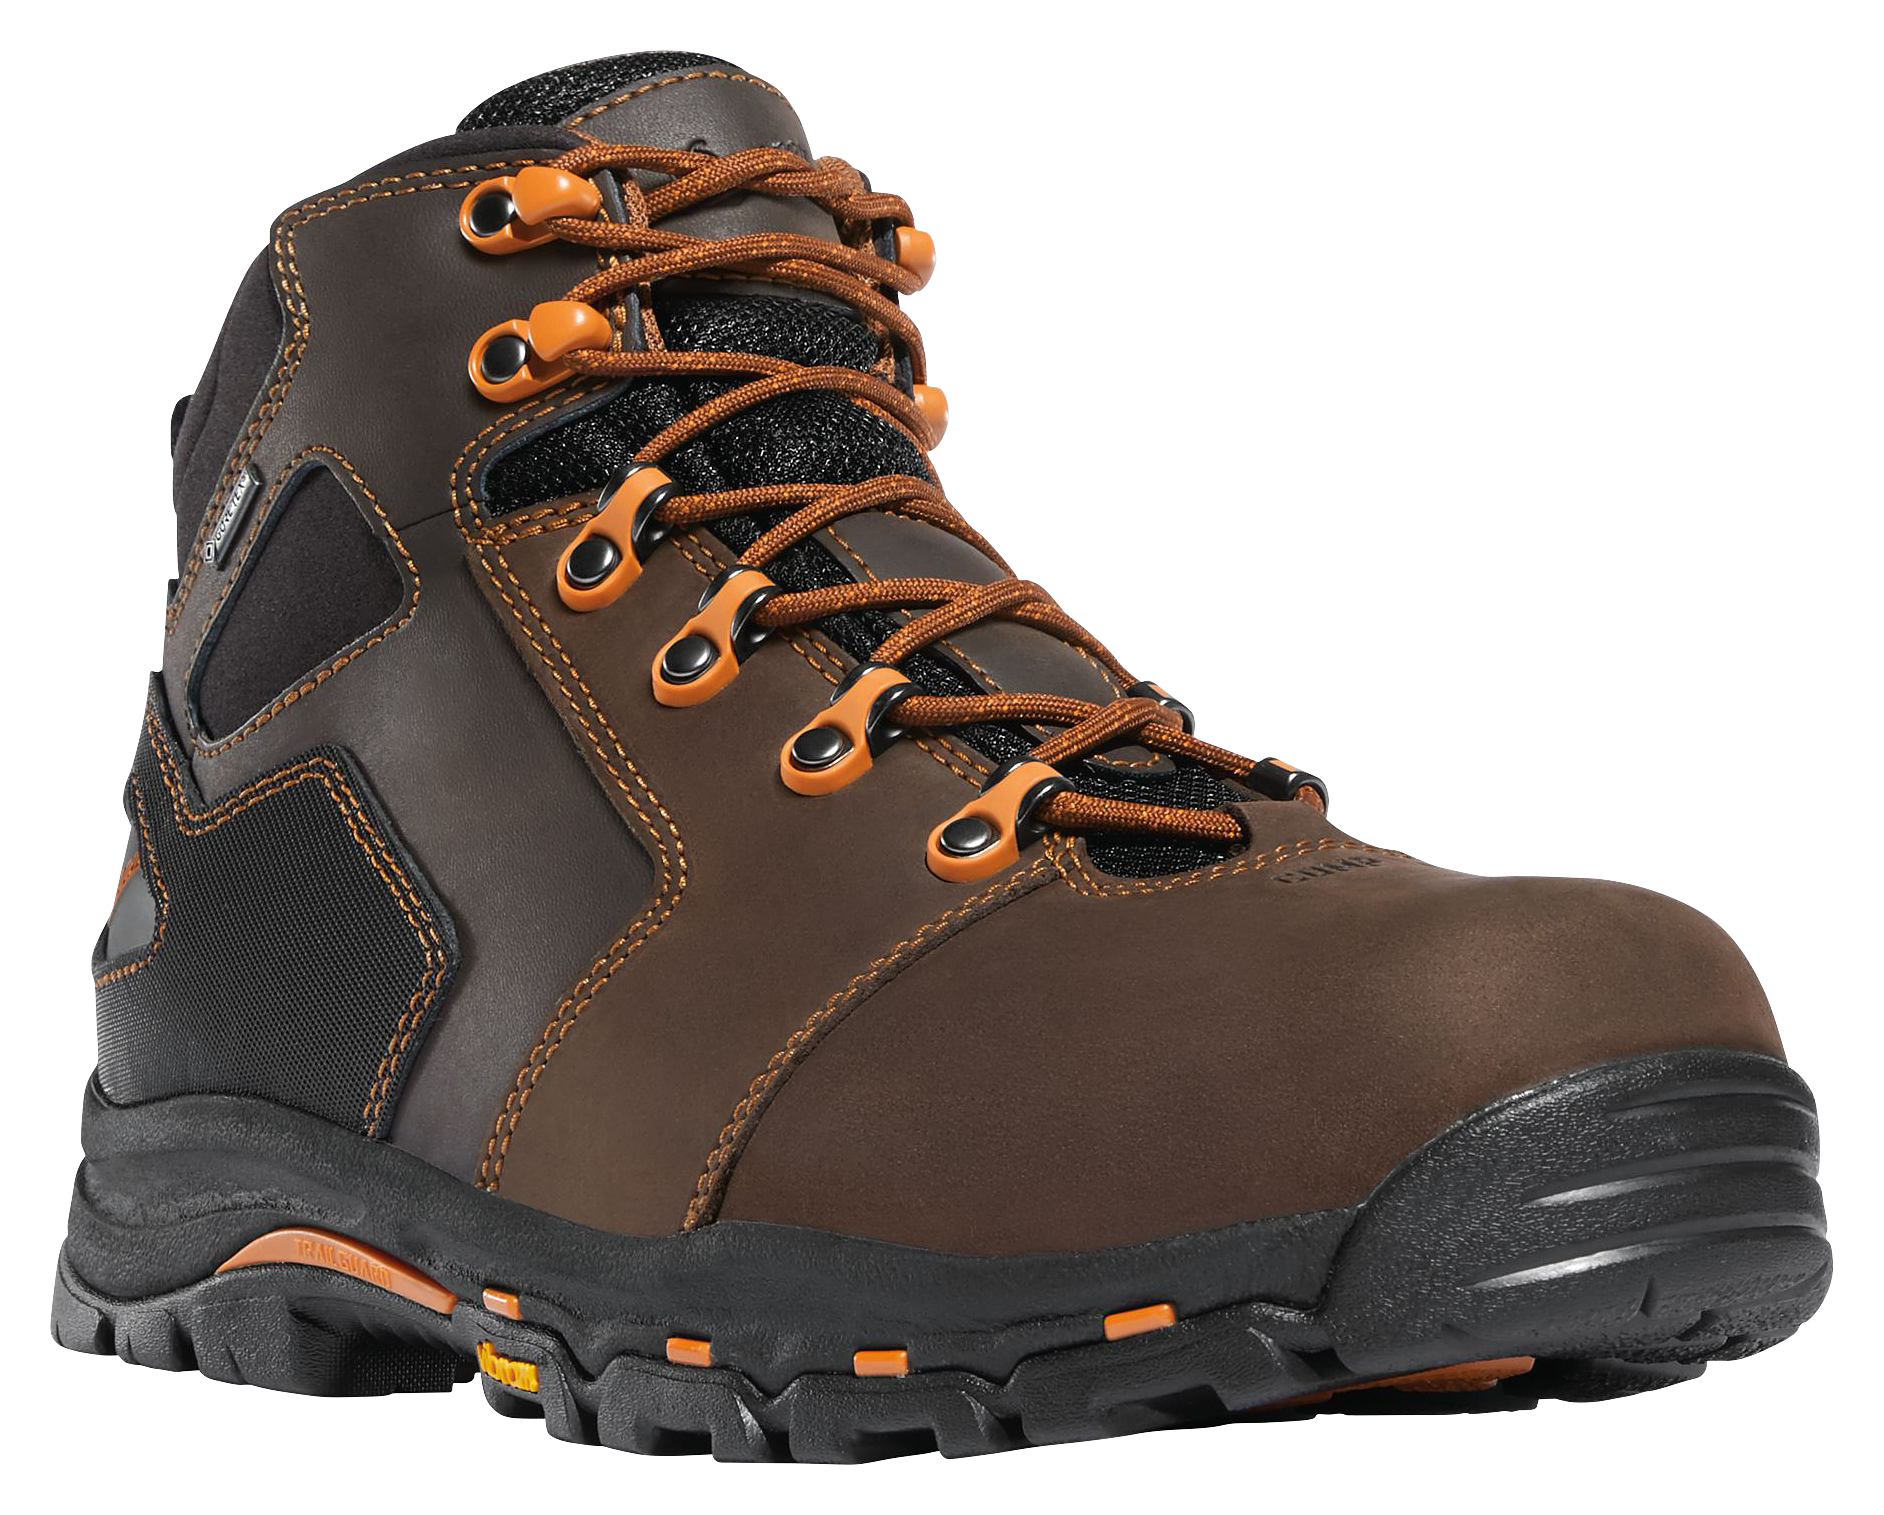 Danner Vicious 4.5'' GORE-TEX EH Work Boots for Men - Brown/Orange - 9W